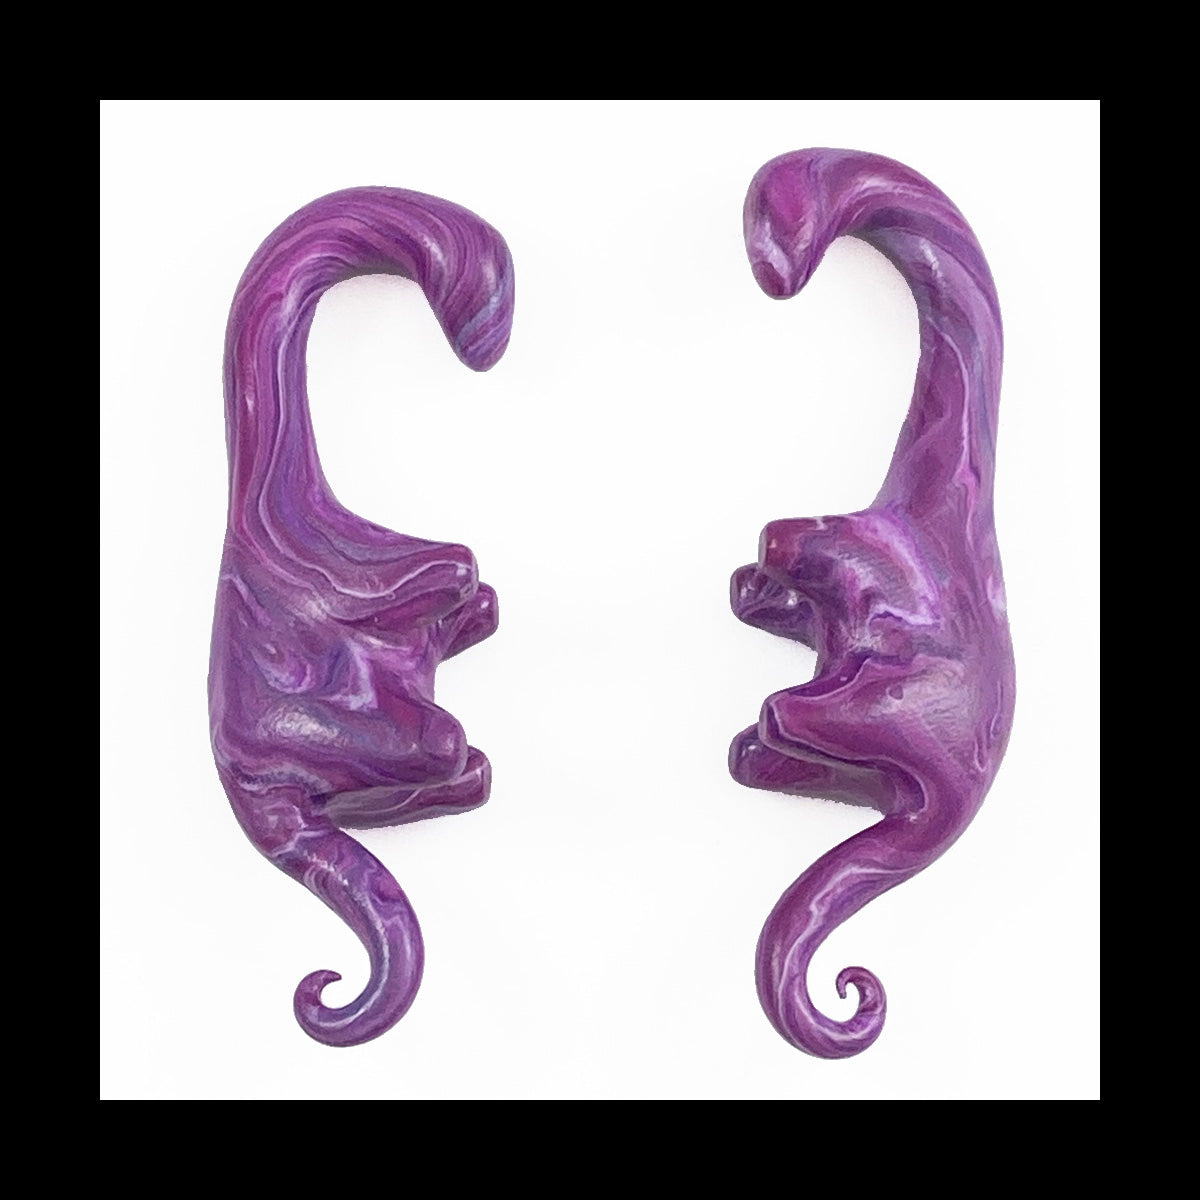 0g 8mm Magenta Swirl Dinosaur Handmade Clay Gauge Earrings